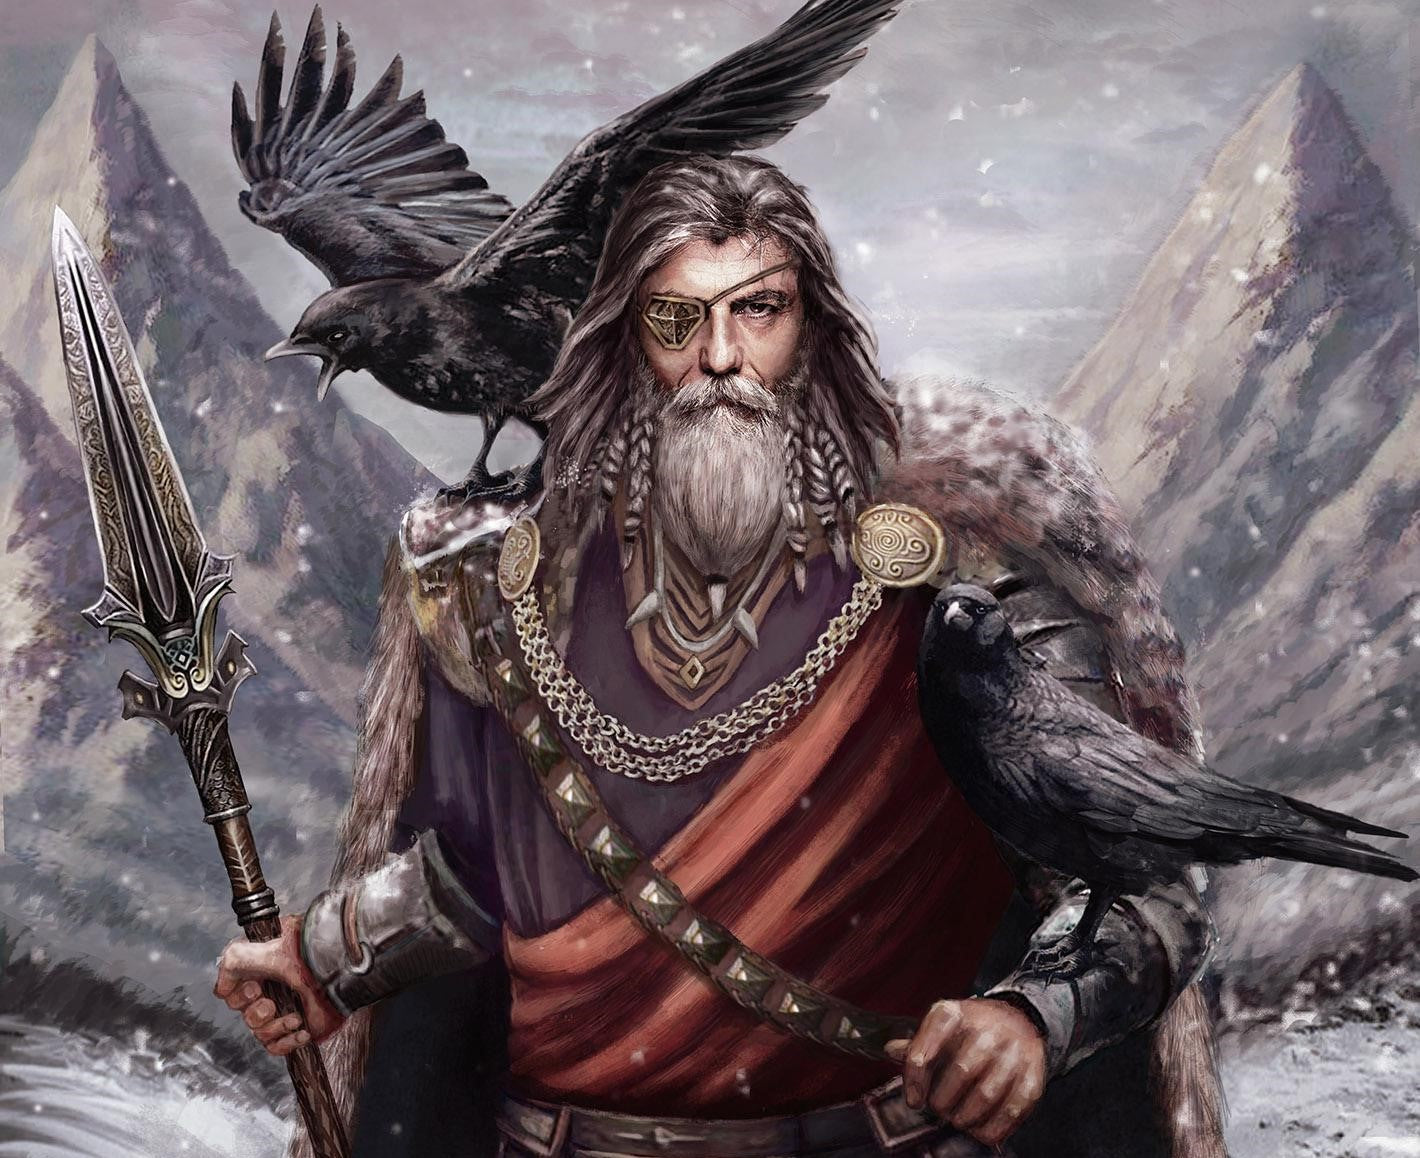 Odin, God of War Wiki